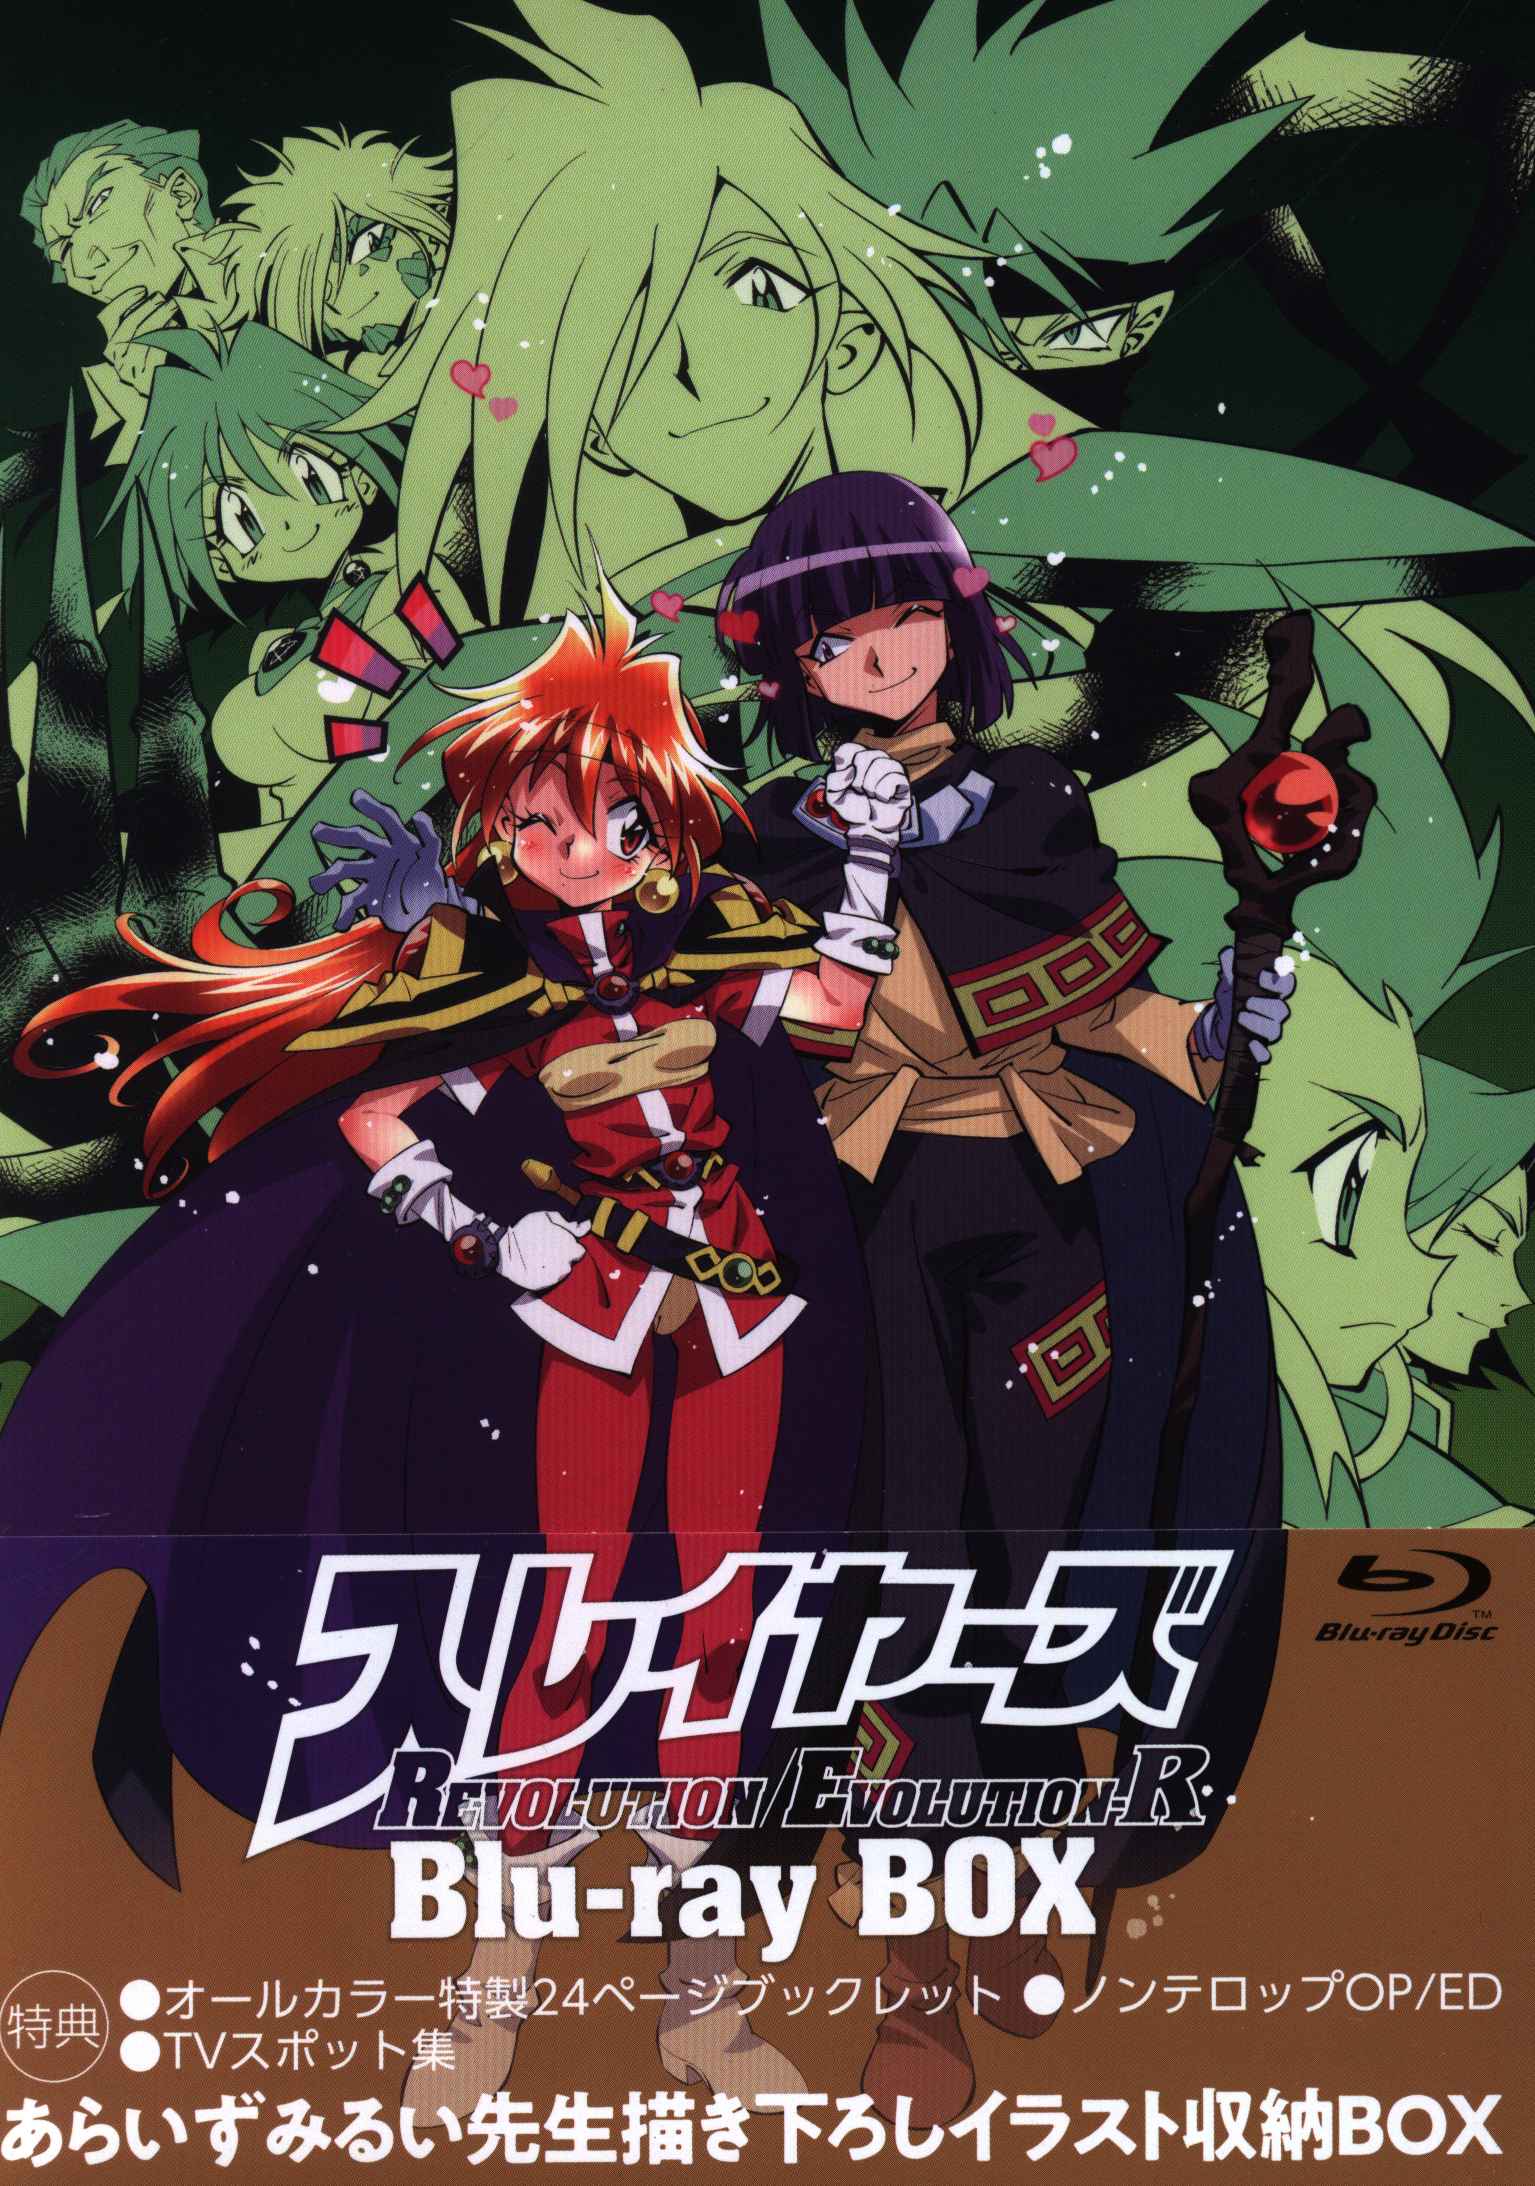 Anime Blu-Ray Slayers REVOLUTION / EVOLUTION-R Blu-ray BOX Limited Edition  | Mandarake Online Shop